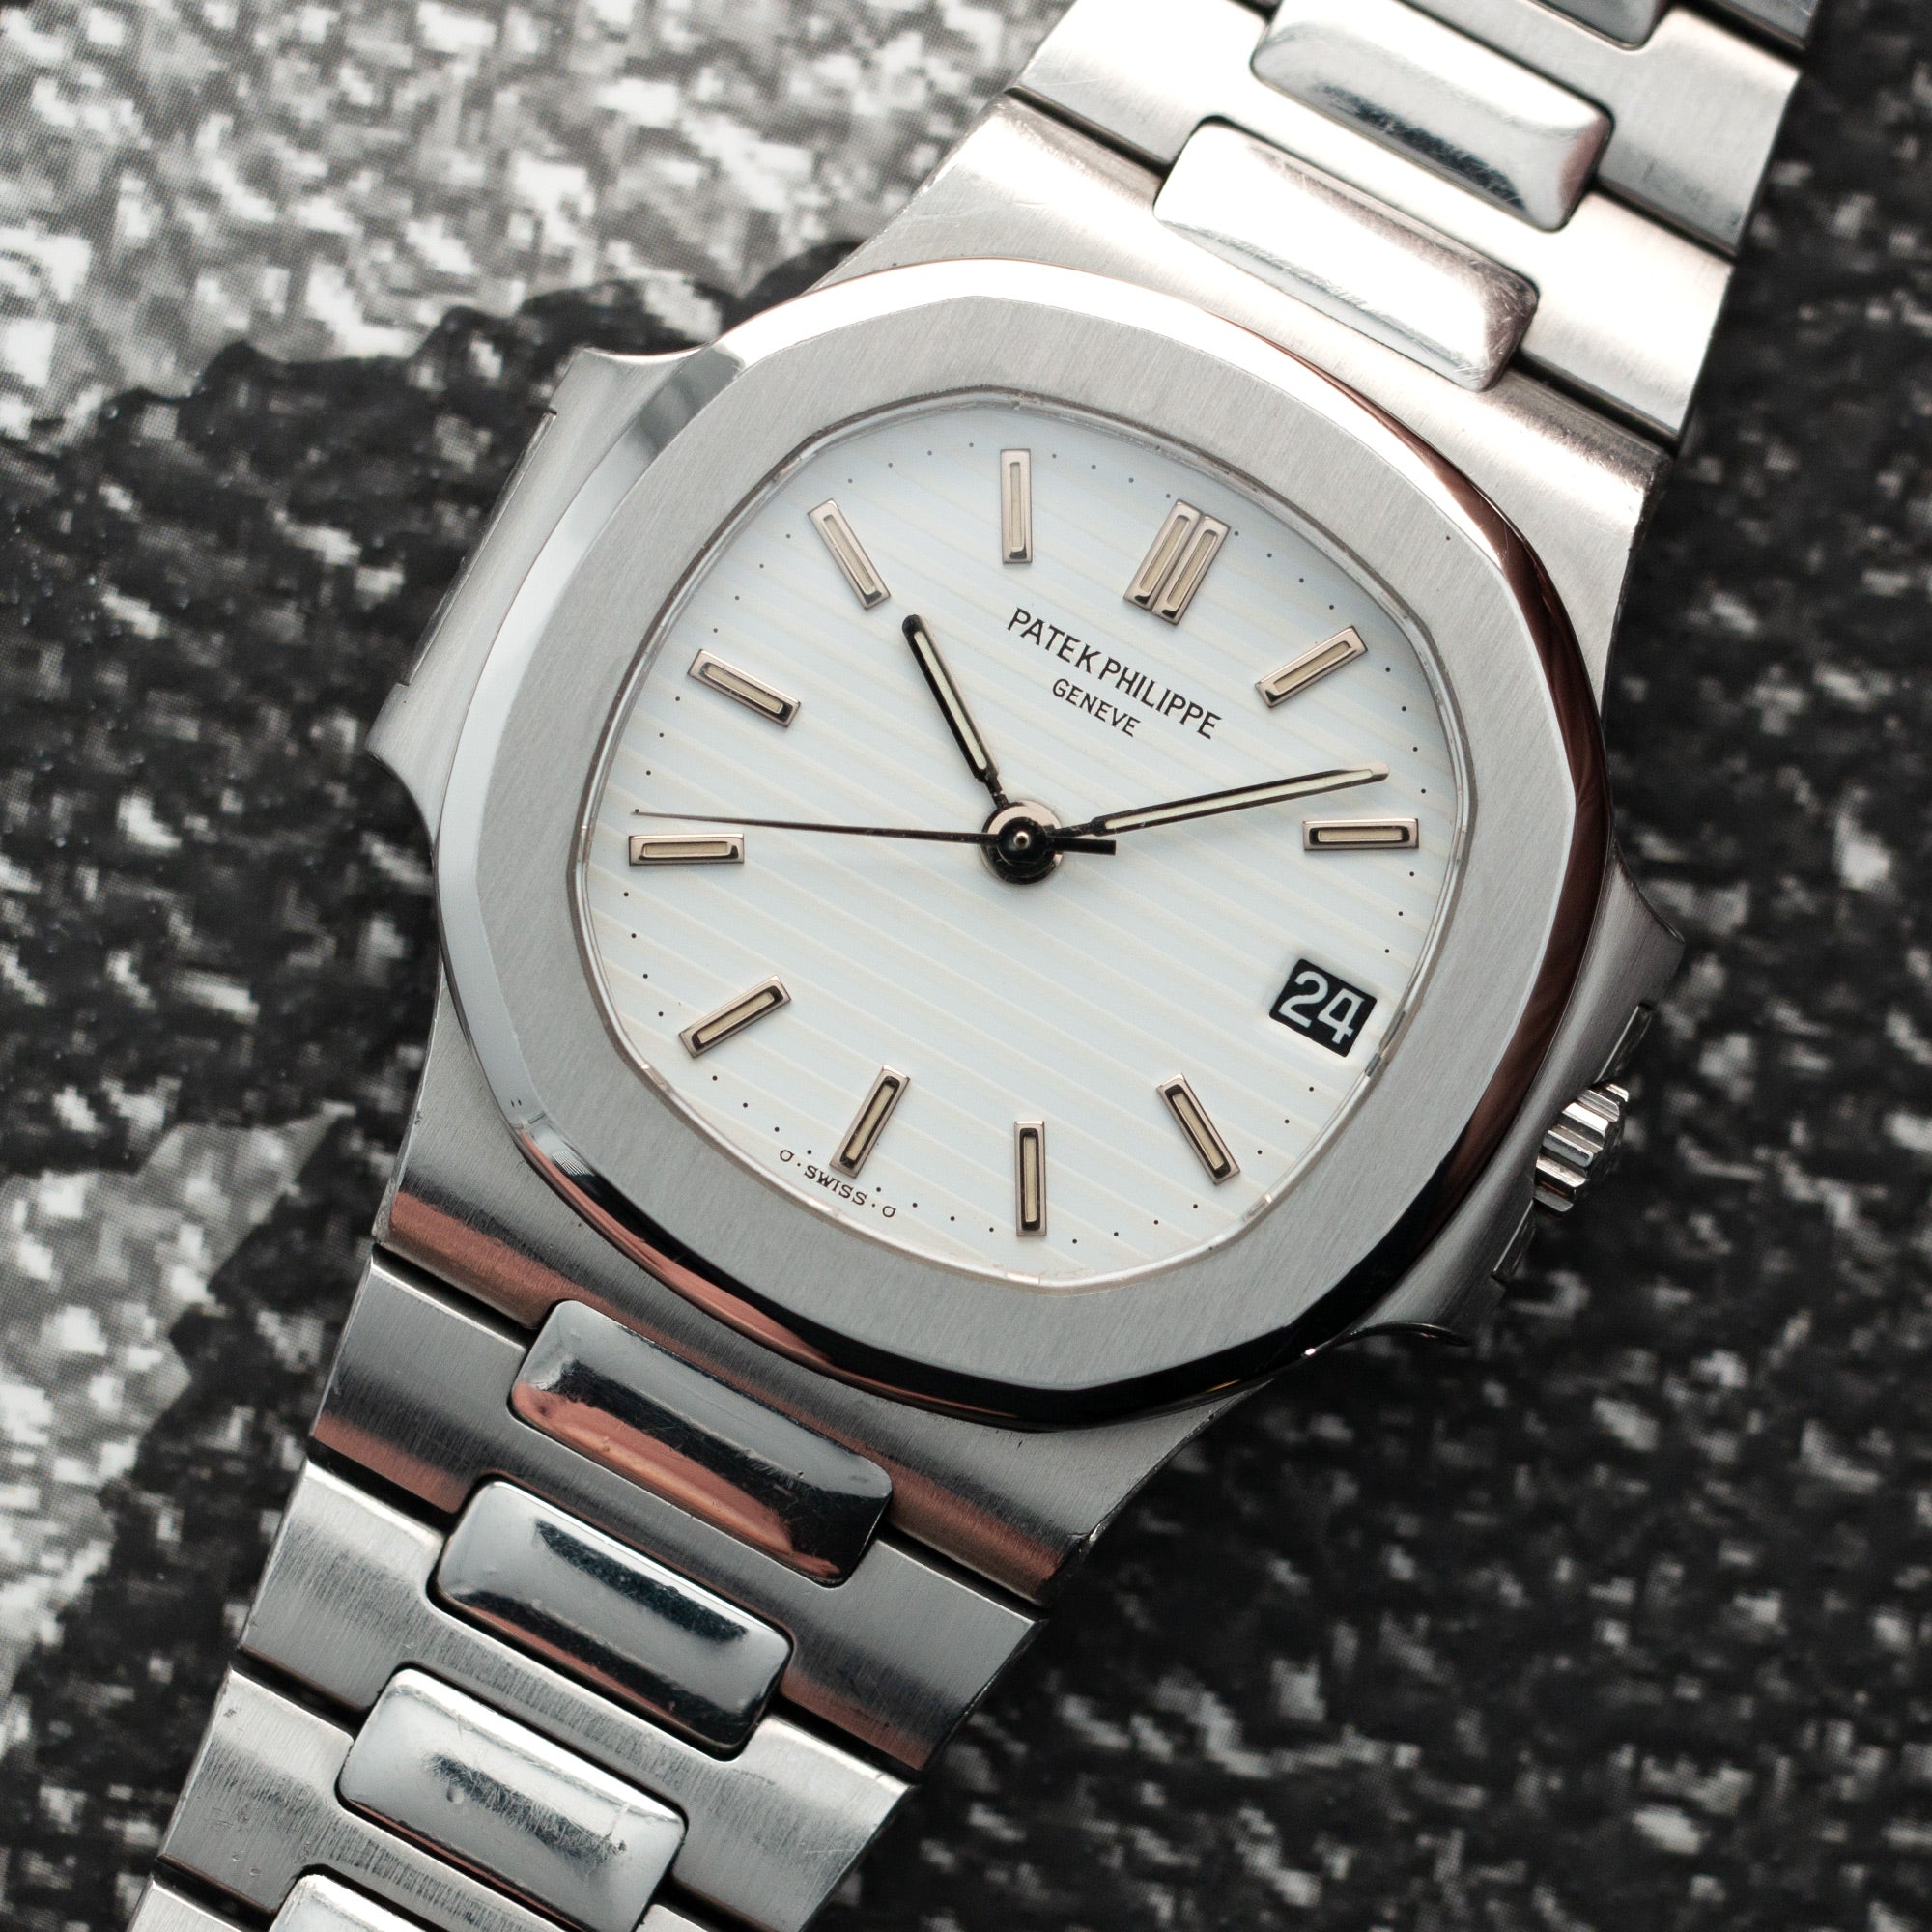 Patek Philippe - Patek Philippe Steel Nautilus Ref. 3800 with White Dial - The Keystone Watches